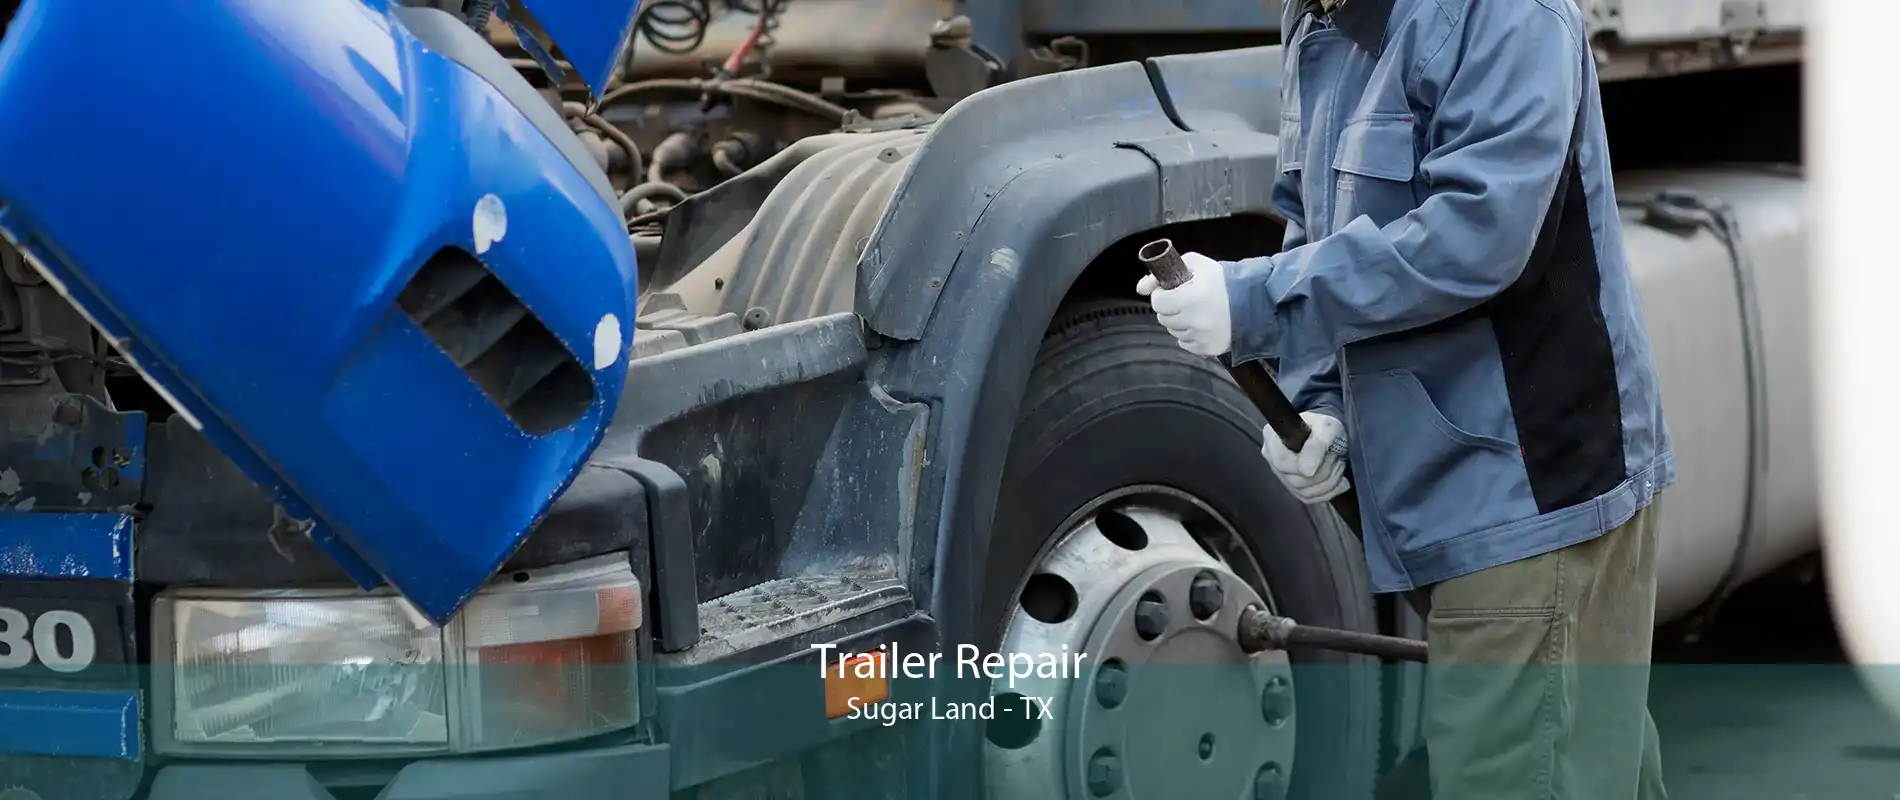 Trailer Repair Sugar Land - TX